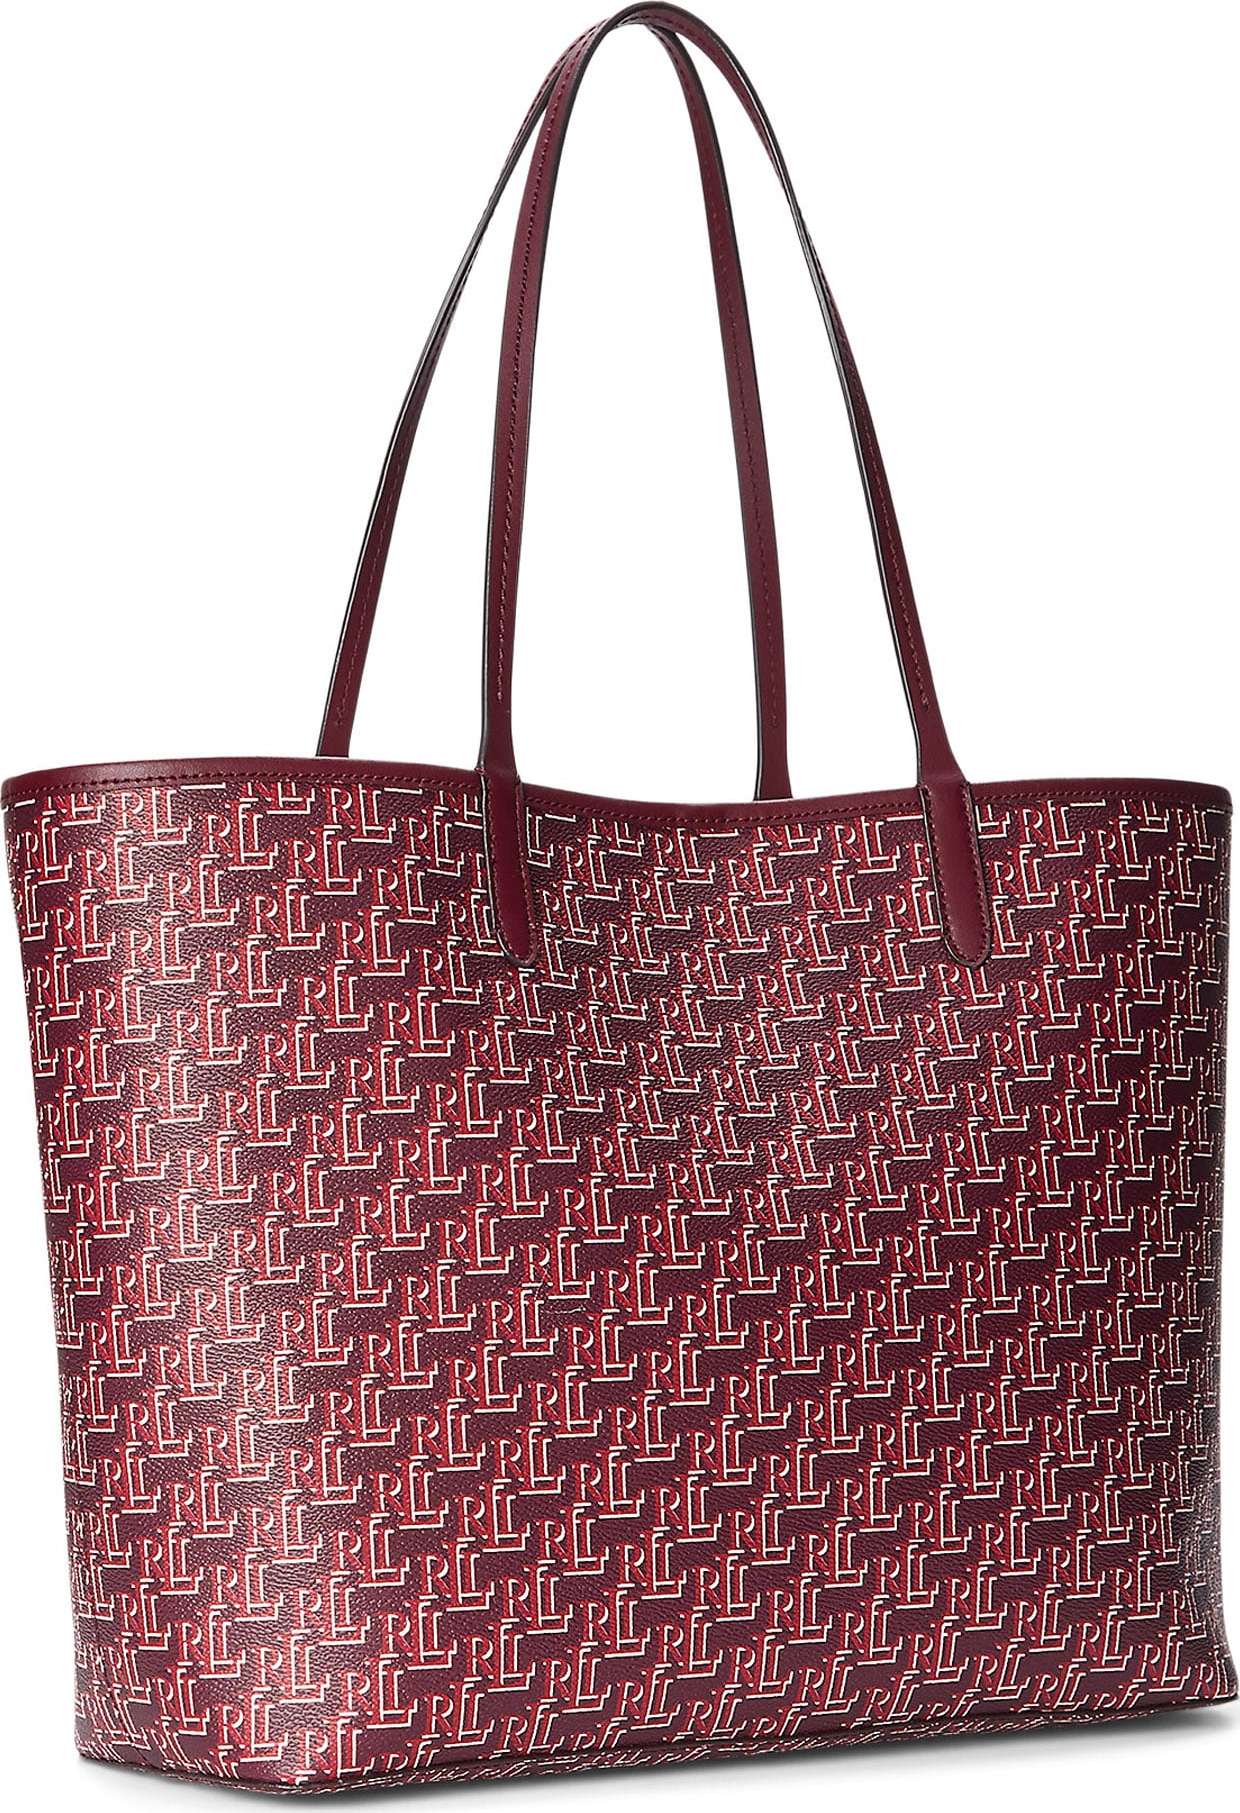 Lauren Ralph Lauren Nákupní taška 'COLLINS' vínově červená / bílá